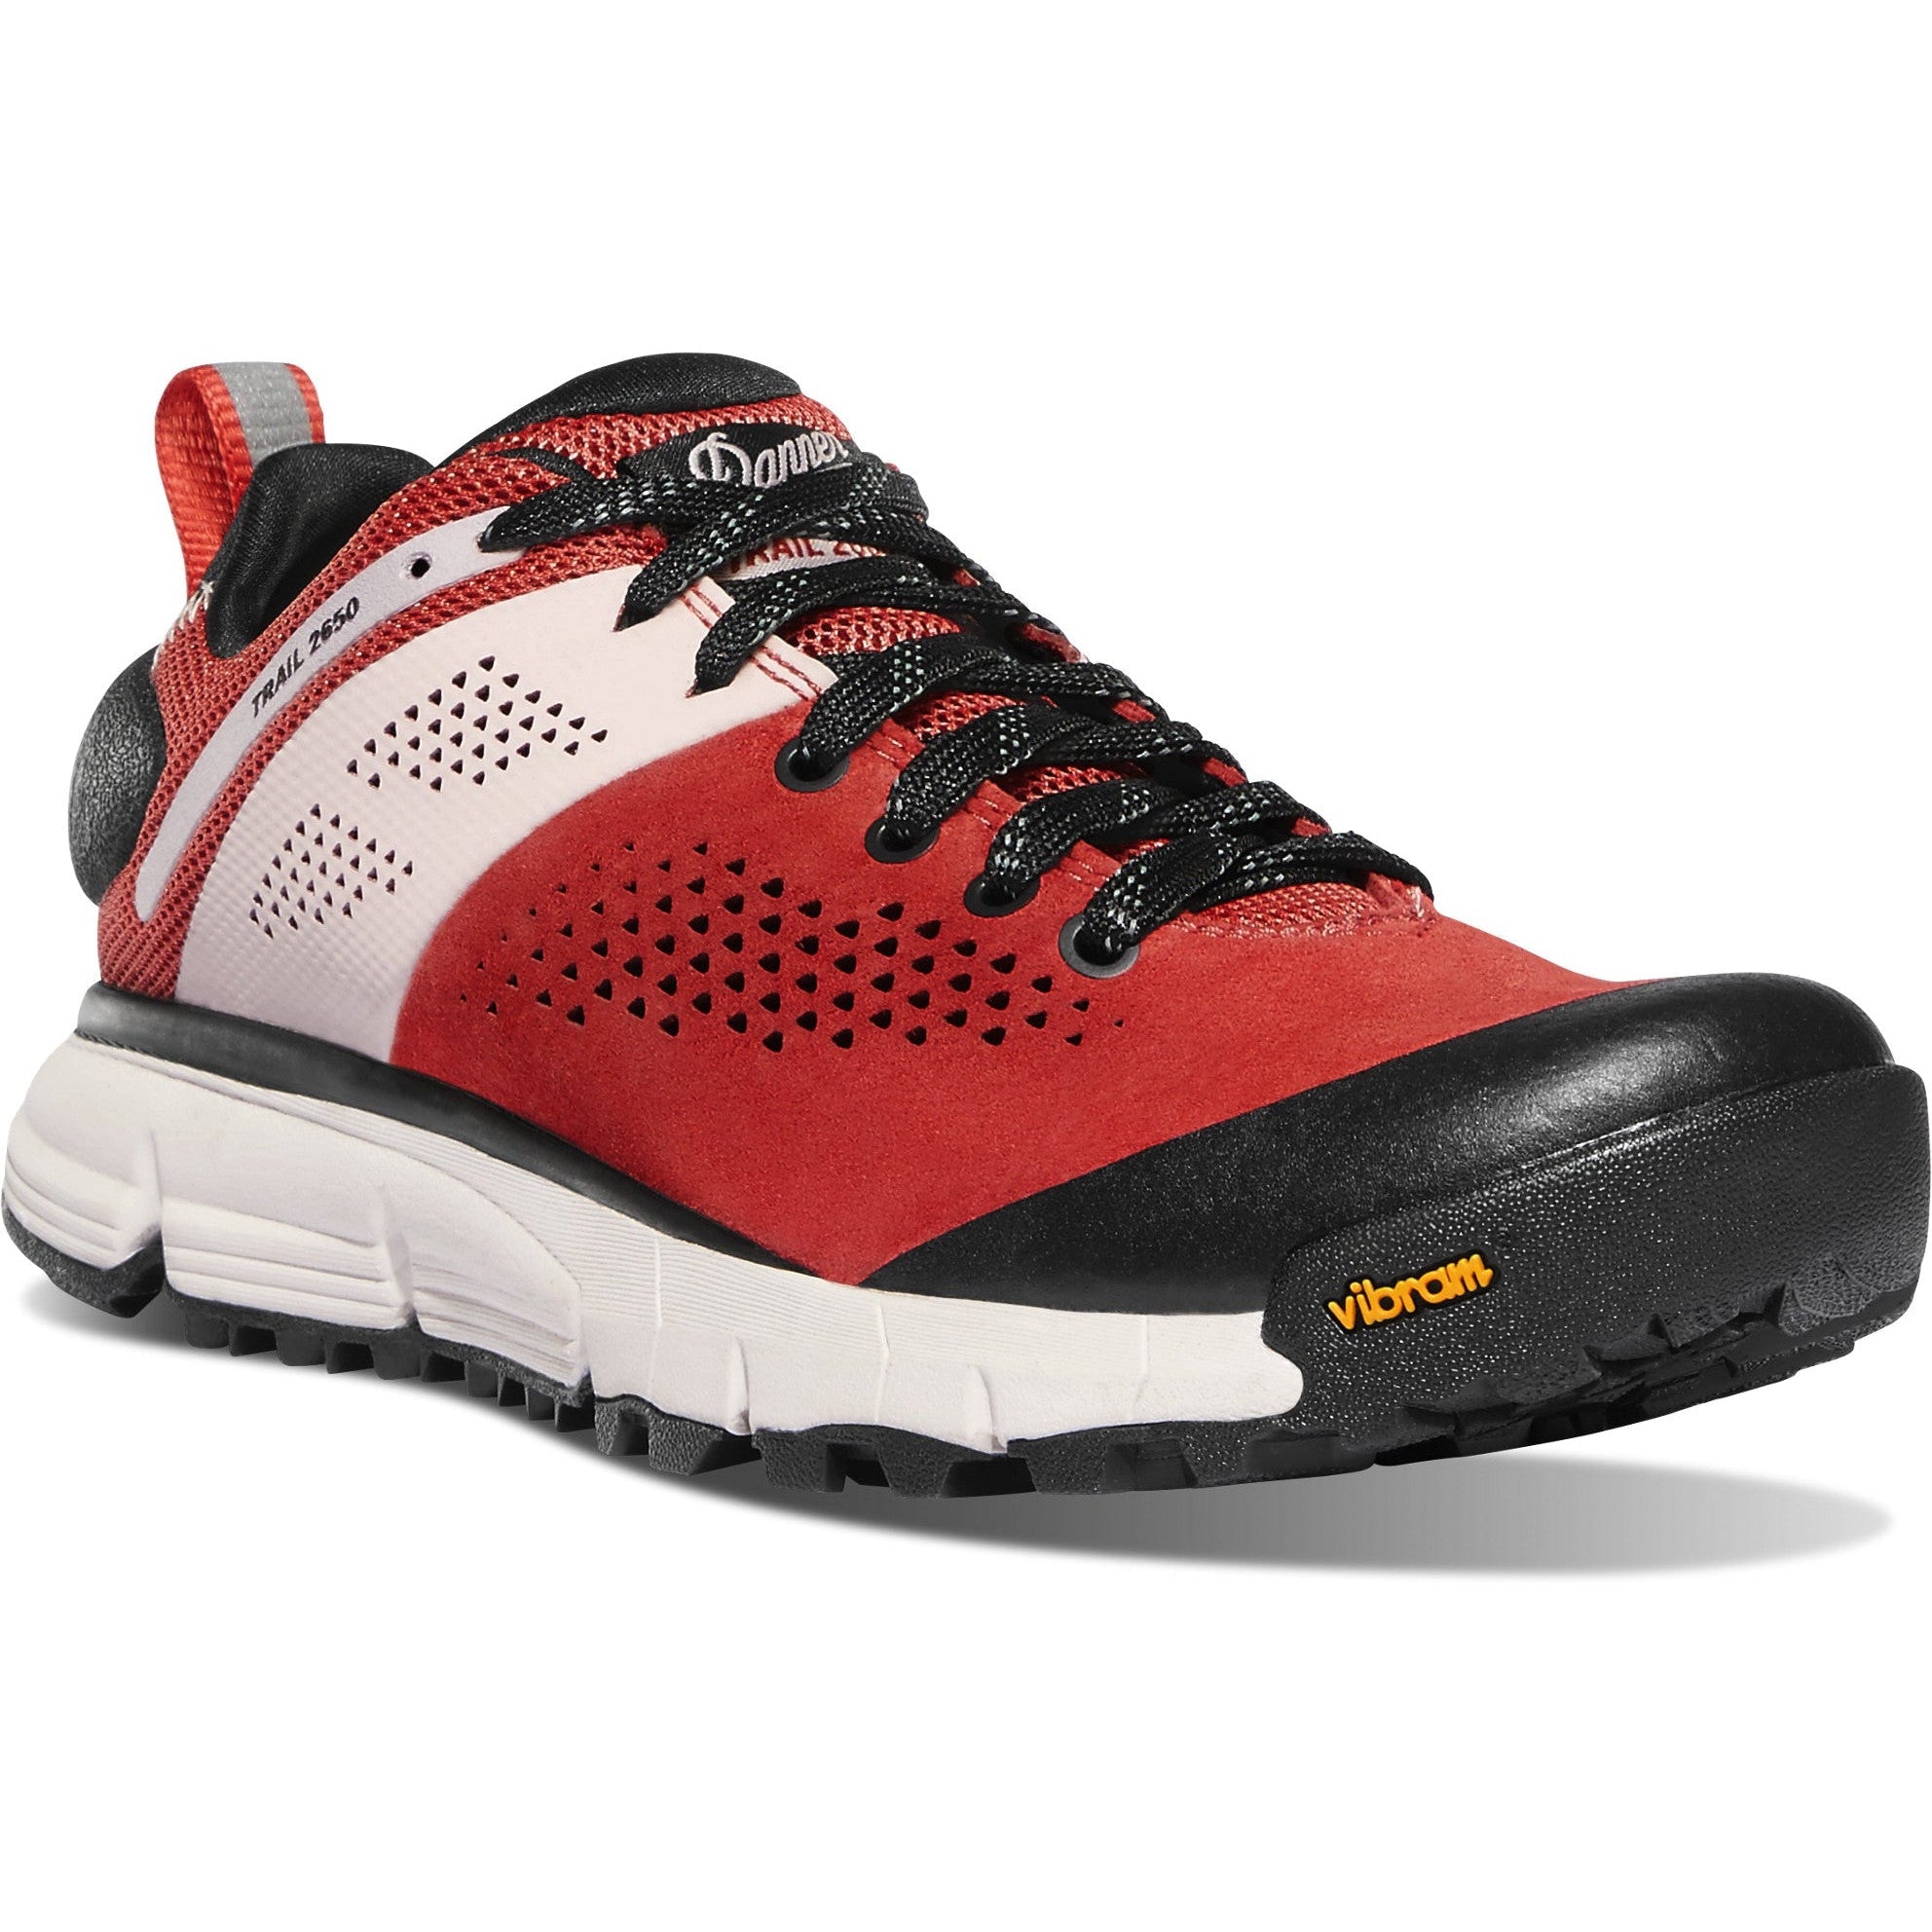 Danner Women's Trail 2650 3" Hiker Shoe - Hot Sauce - 61274 5 / Medium / Red - Overlook Boots